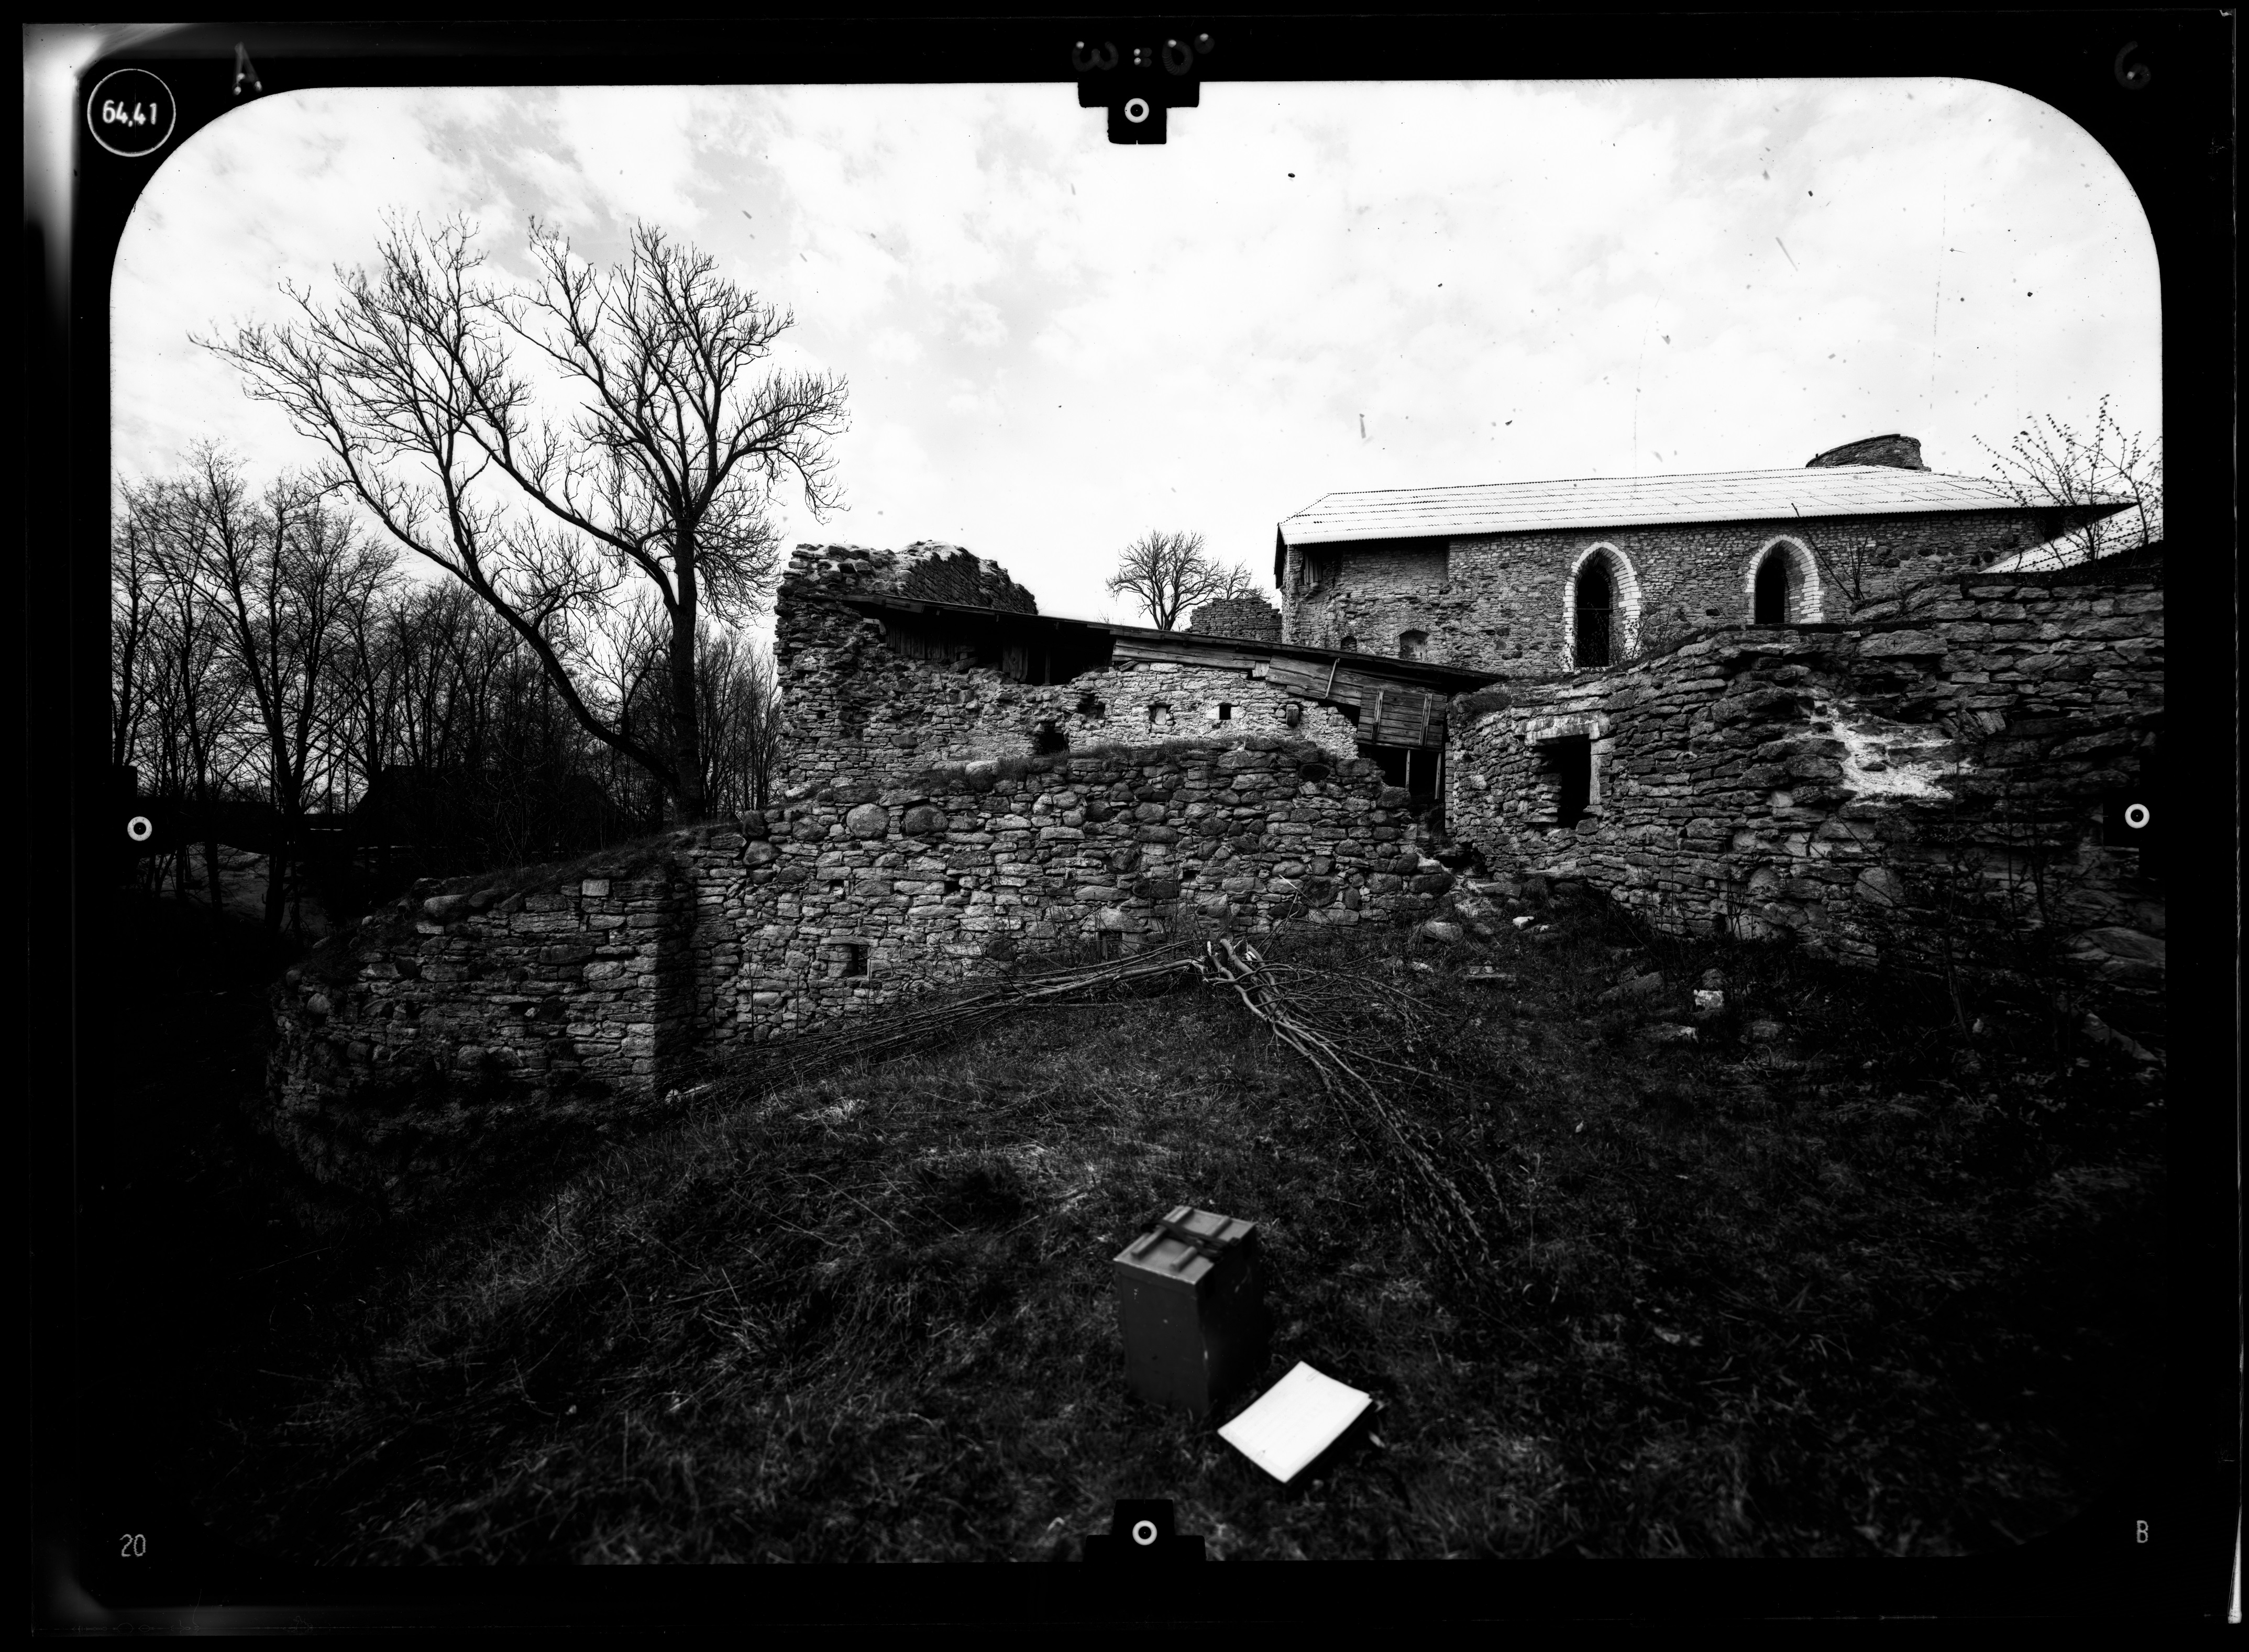 Padise A6-0 - Padise abbey. Stereo photogrammetric survey 1991. https://en.wikipedia.org/wiki/Padise_Abbey